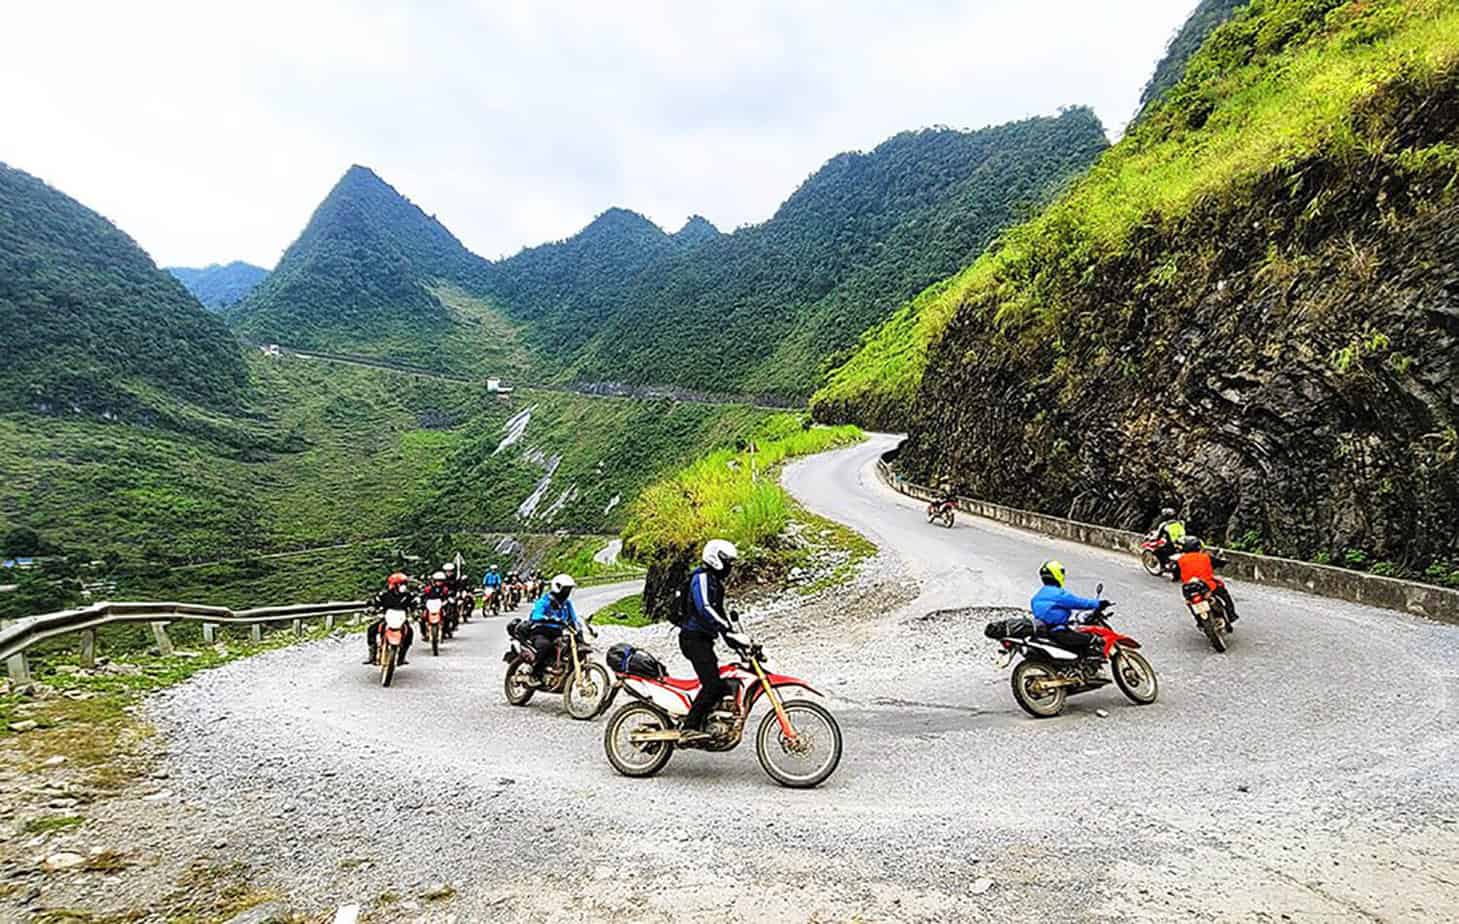 Traveling by motorbike in Vietnam